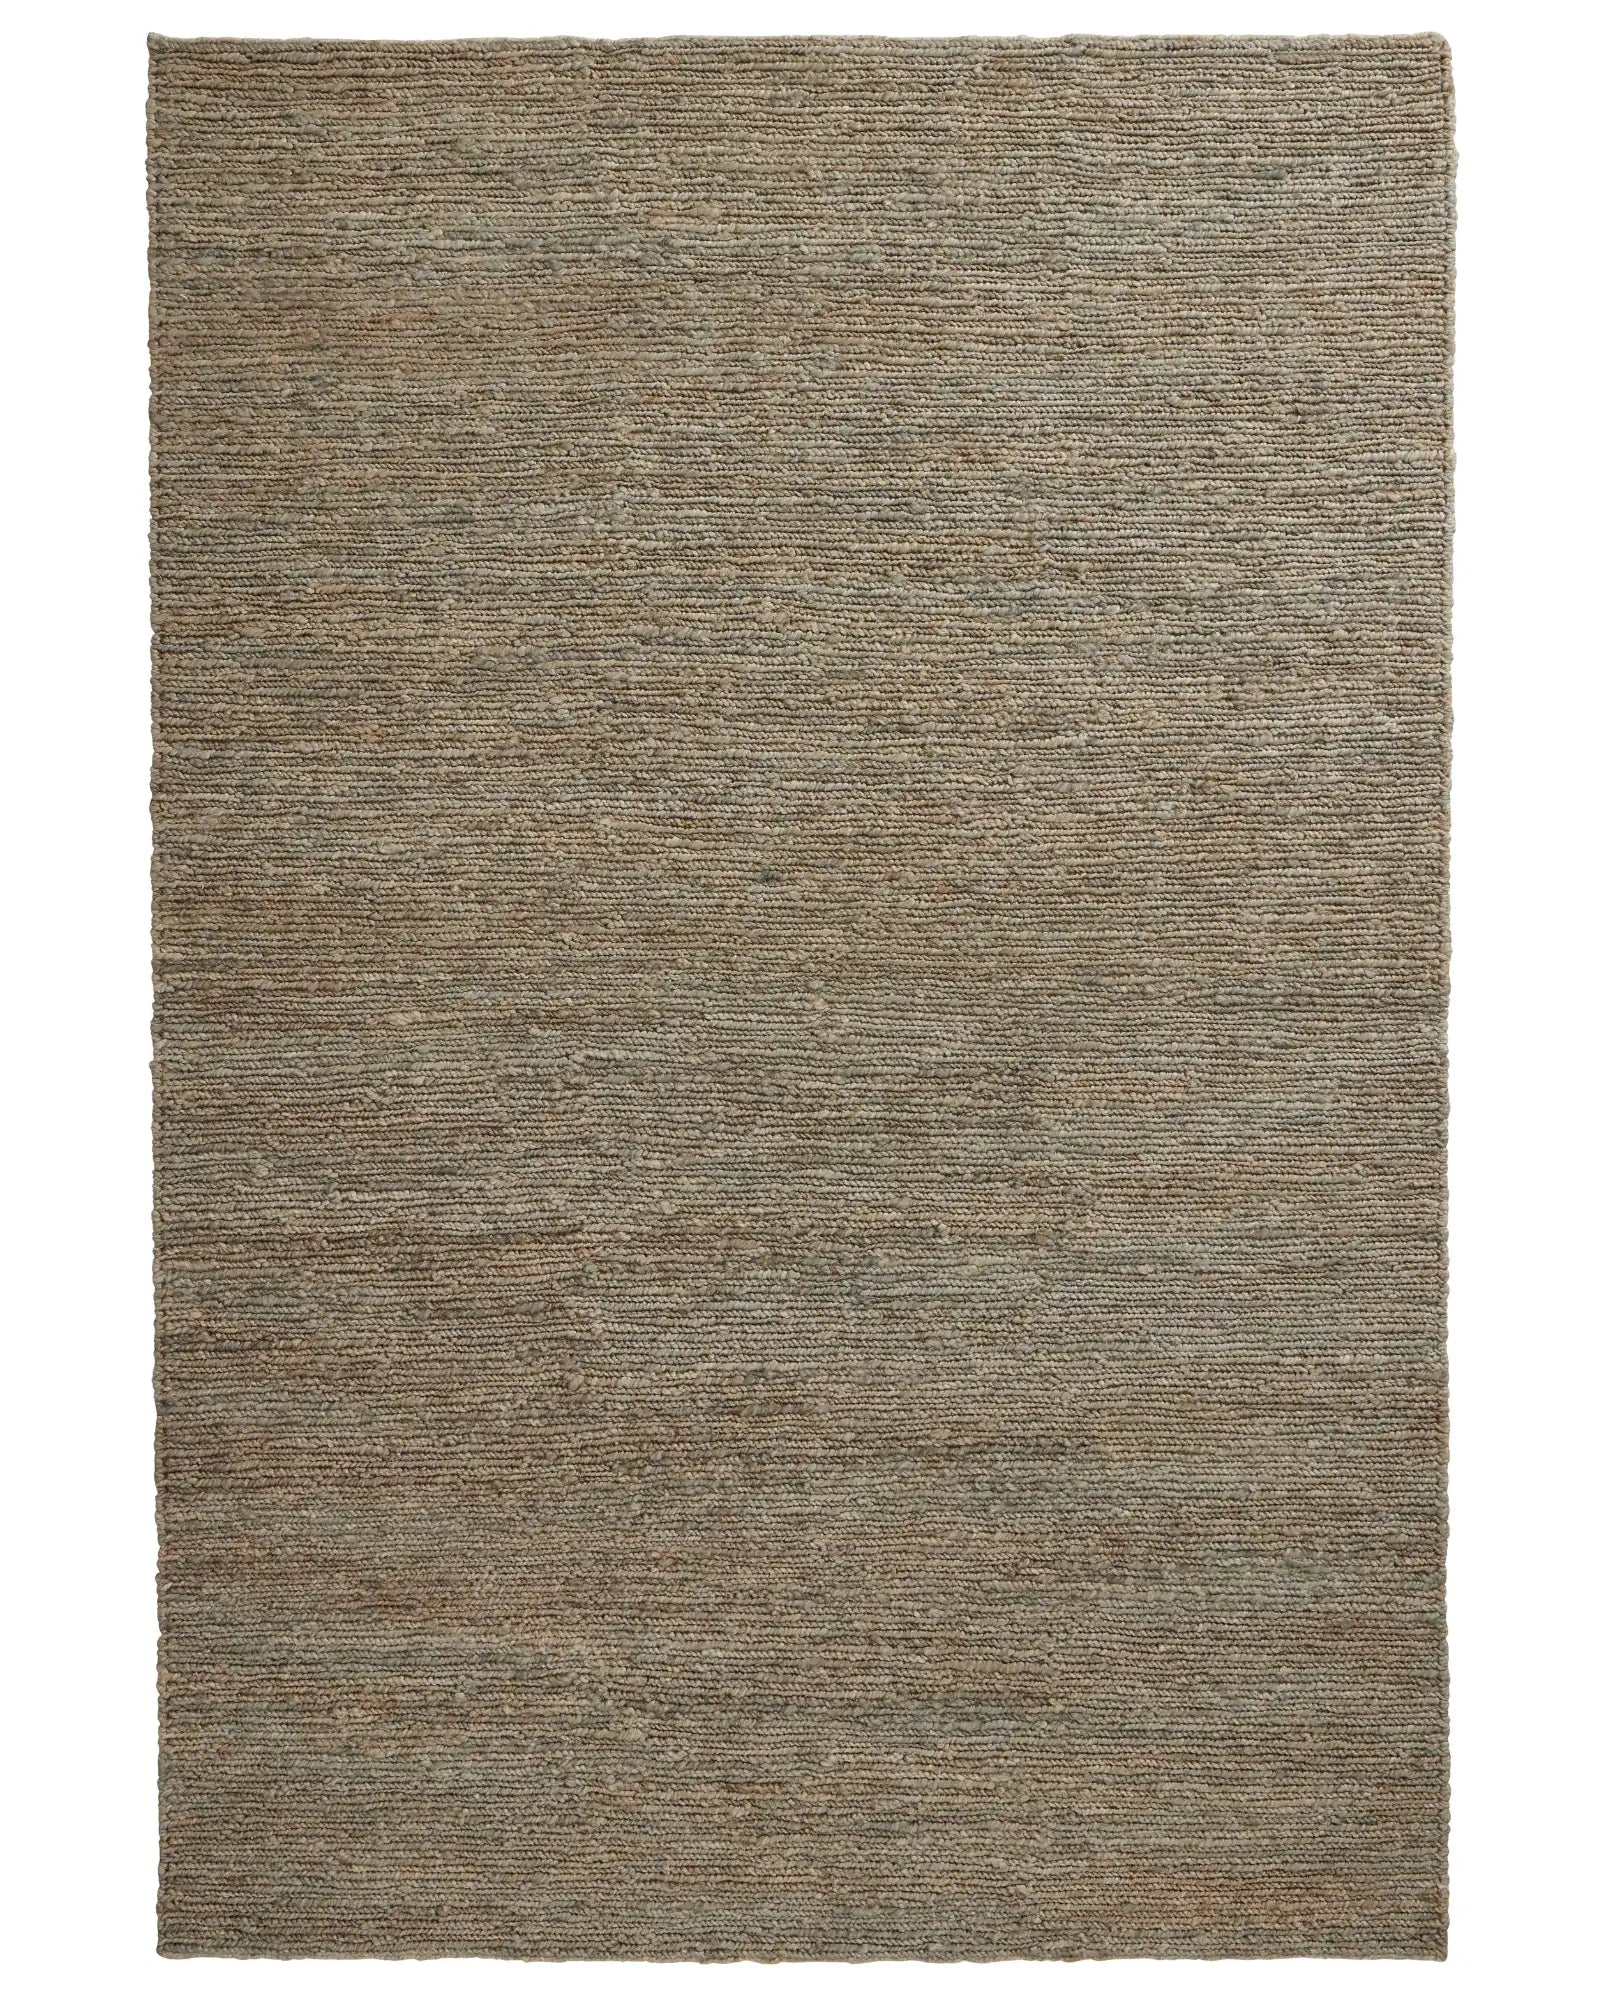 Weave Suffolk Floor Rug - Mineral RSK03MINE